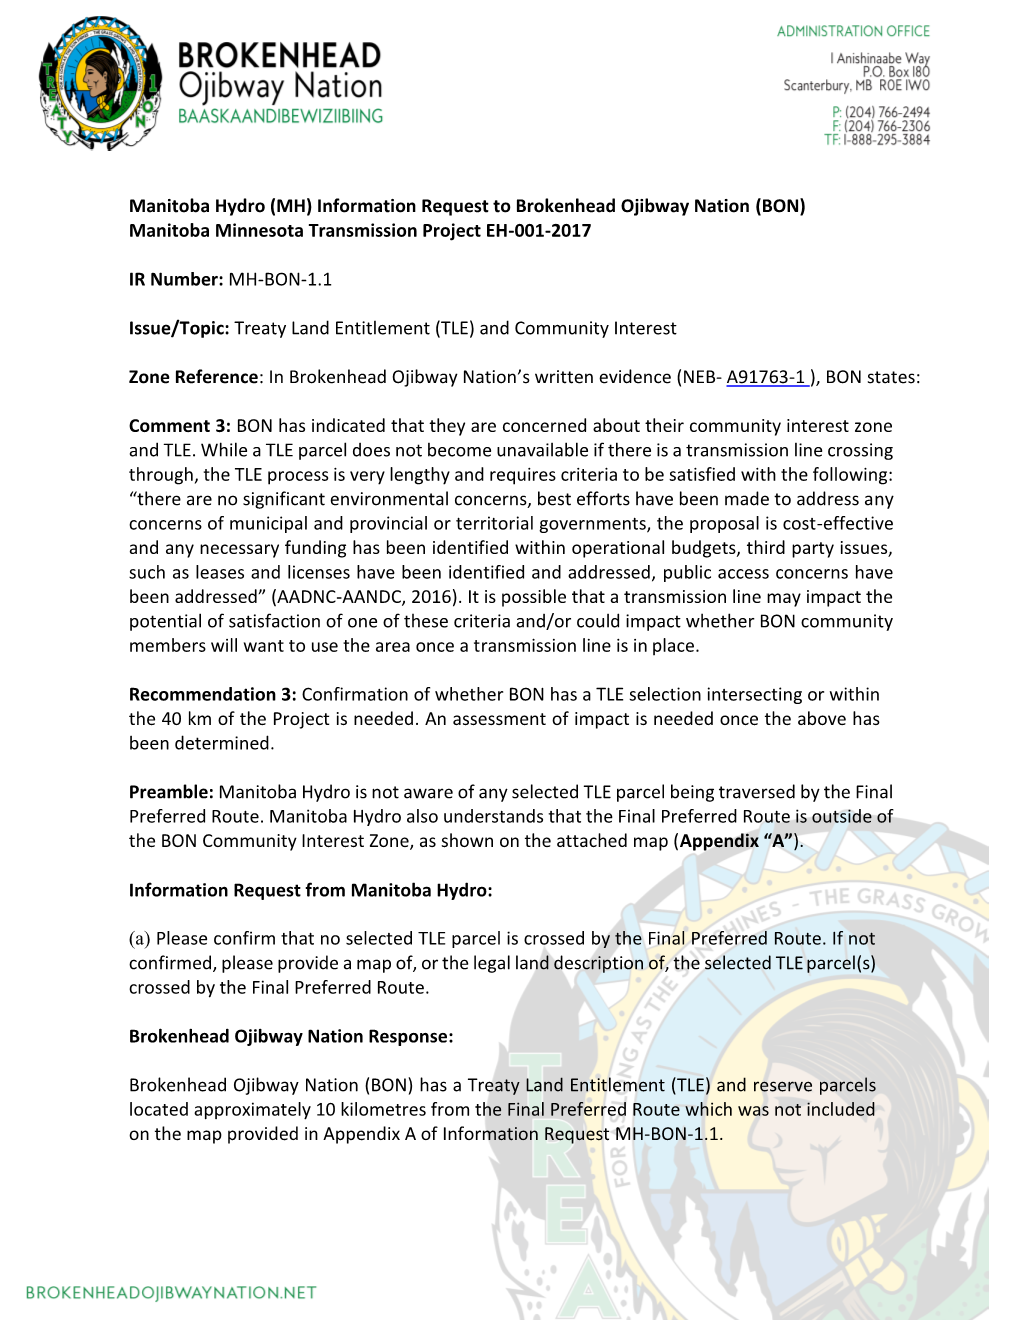 (MH) Information Request to Brokenhead Ojibway Nation (BON) Manitoba Minnesota Transmission Project EH-001-2017